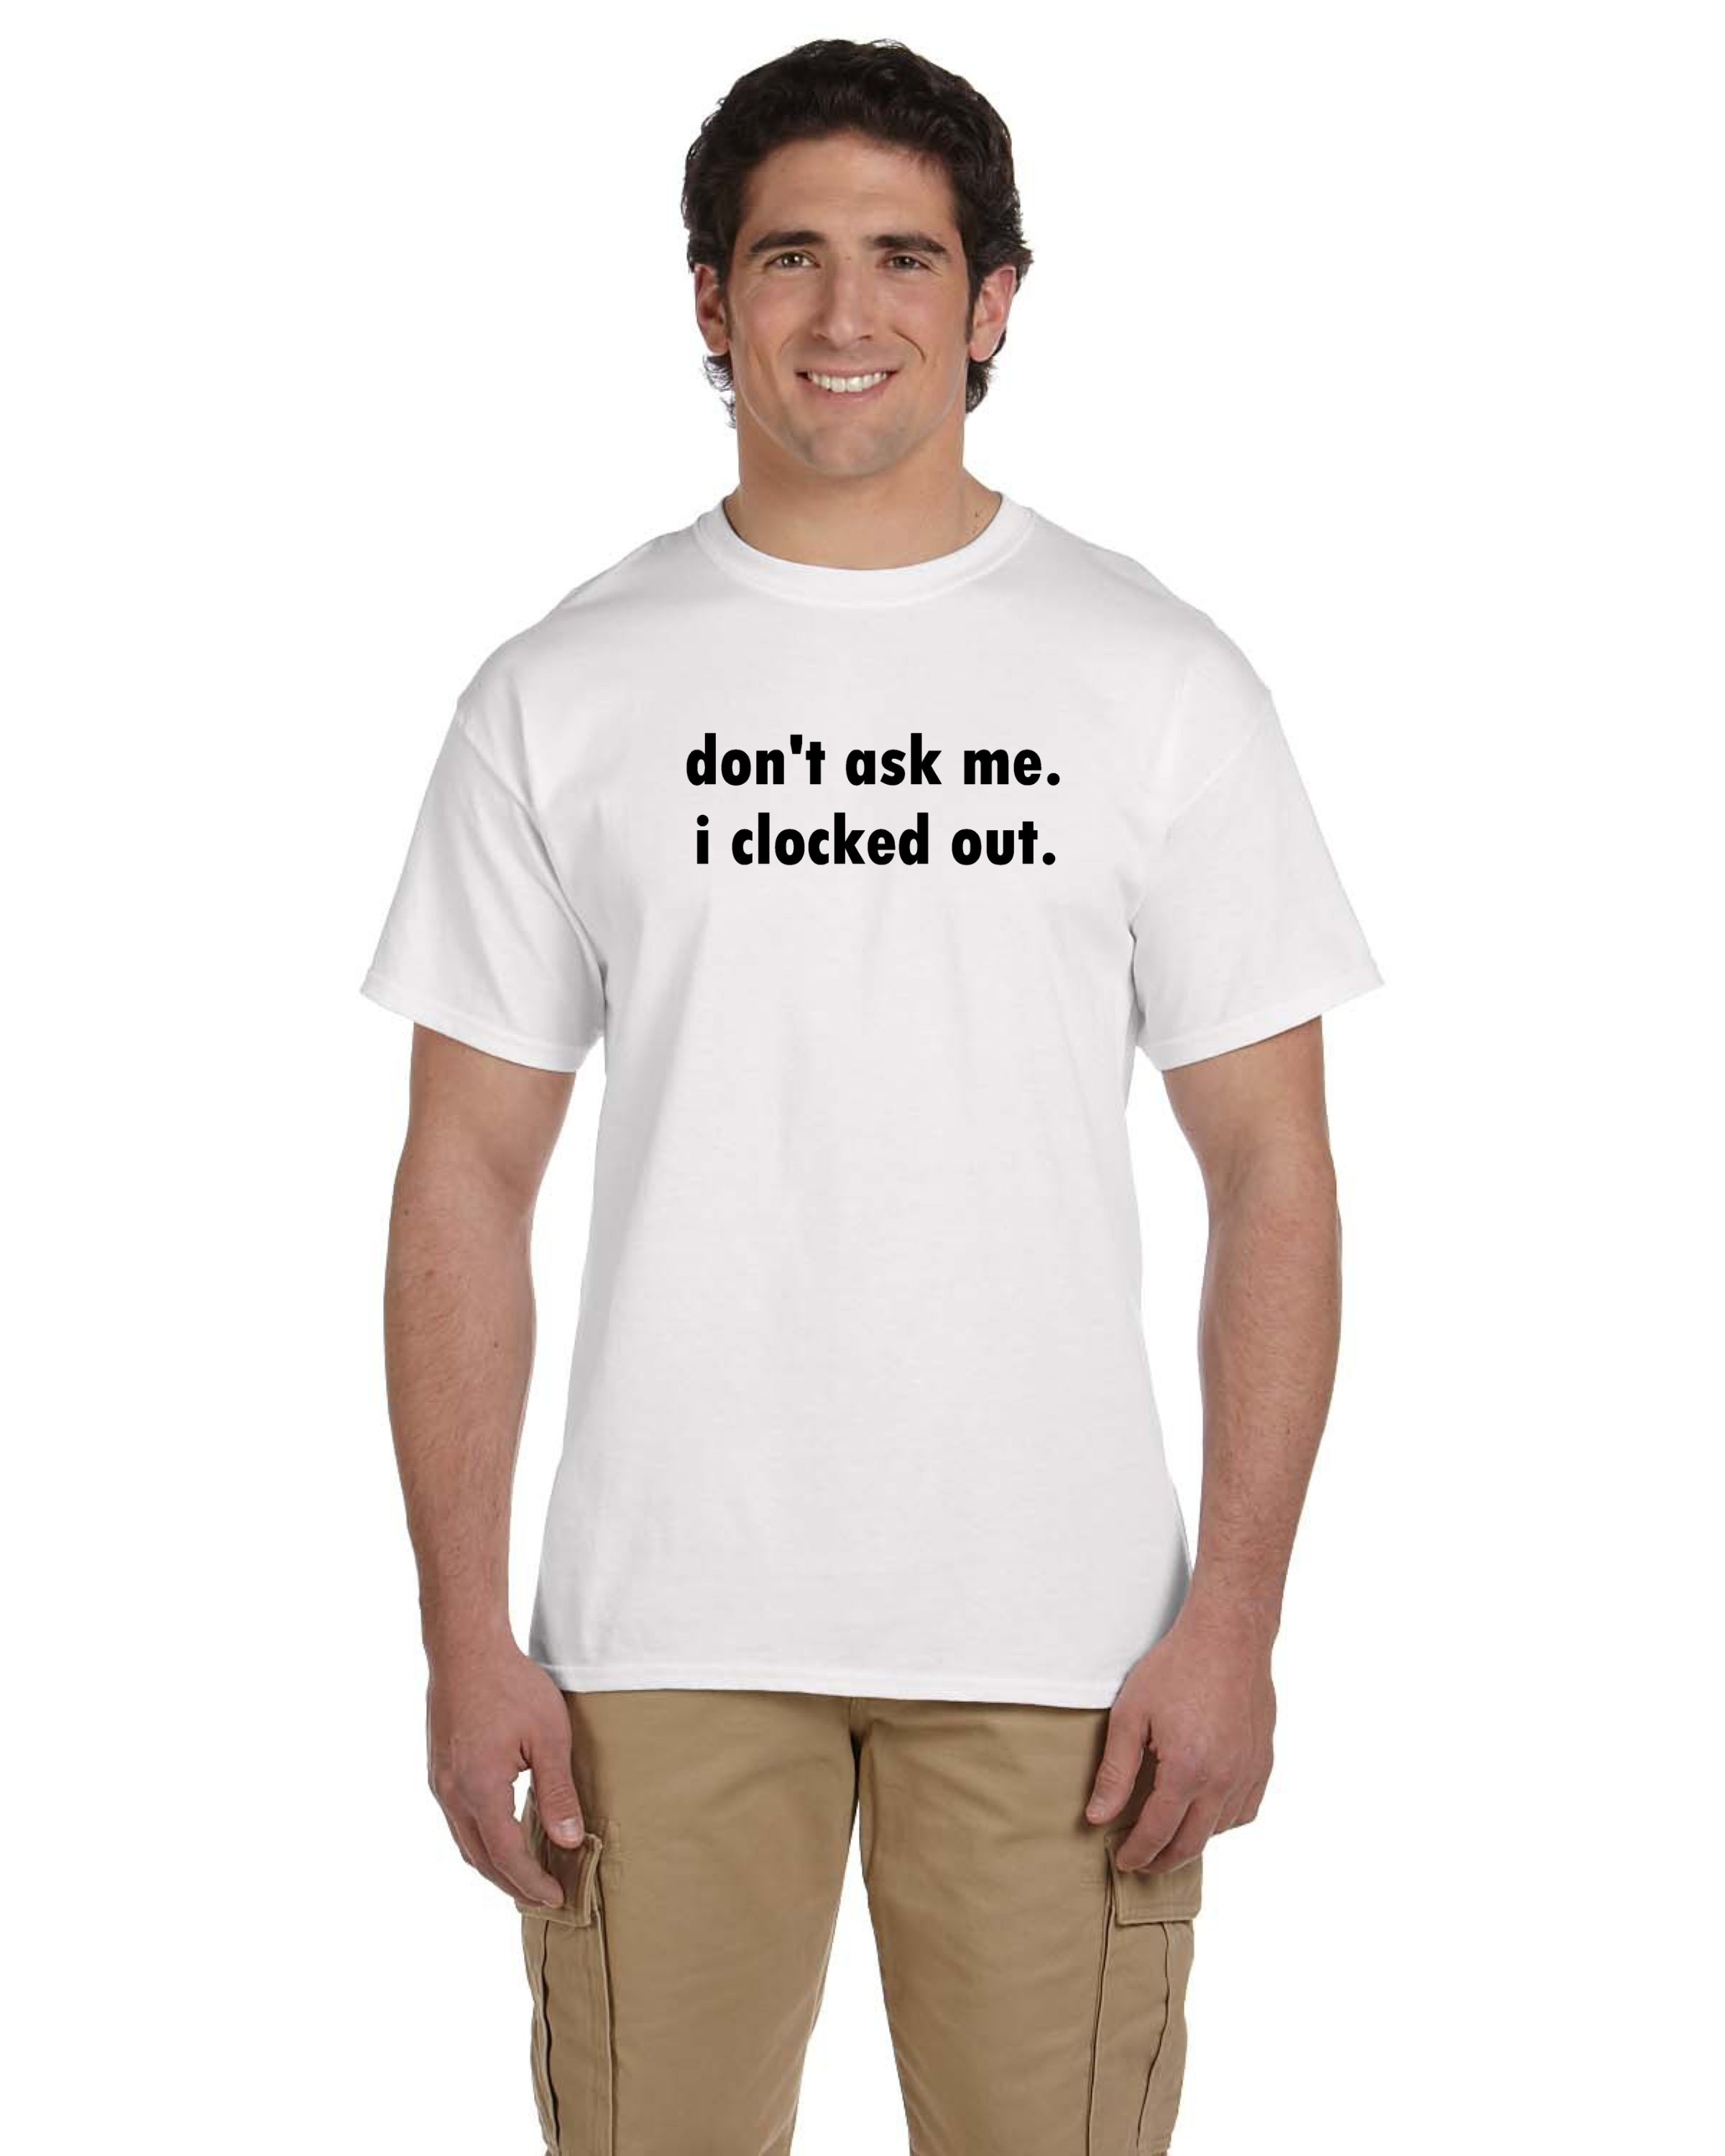 Don't Ask Me shirt Life t-shirt Work Shirt Humorous | Etsy